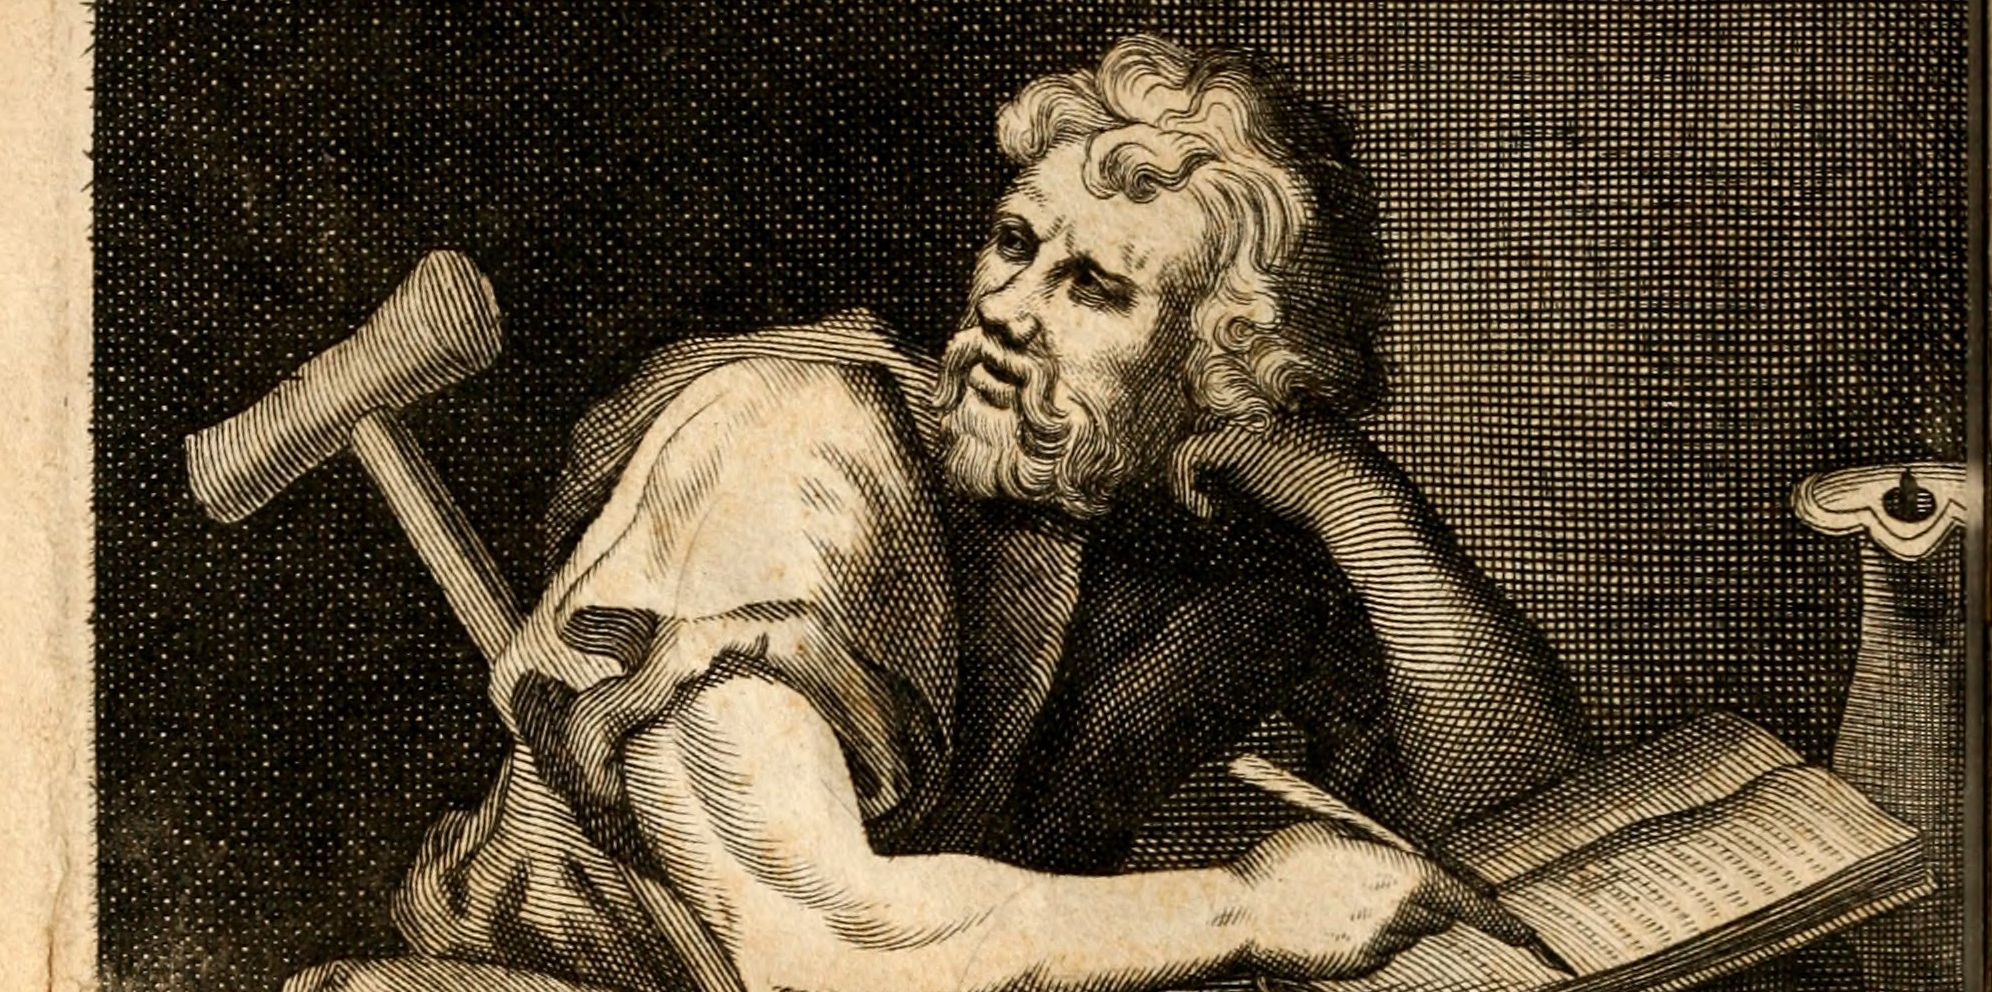 Epictetus with his cane